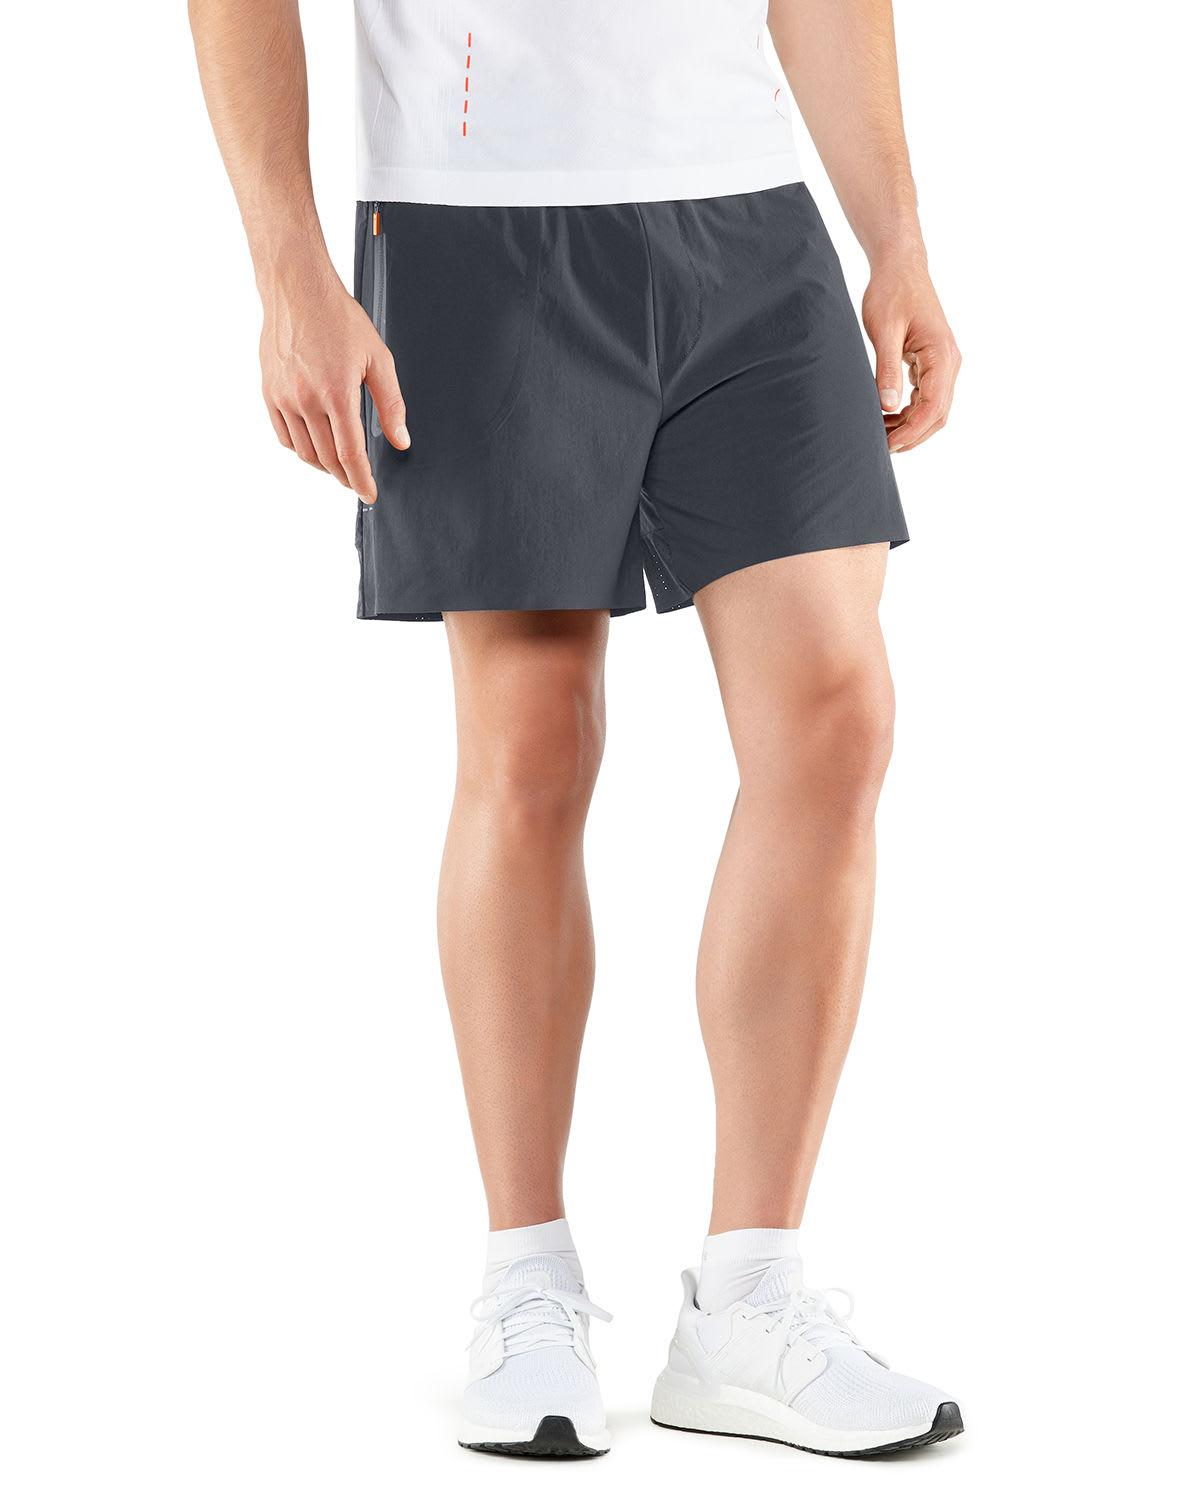 FALKE Challenger Water-resistant Shorts in Blue for Men | Lyst